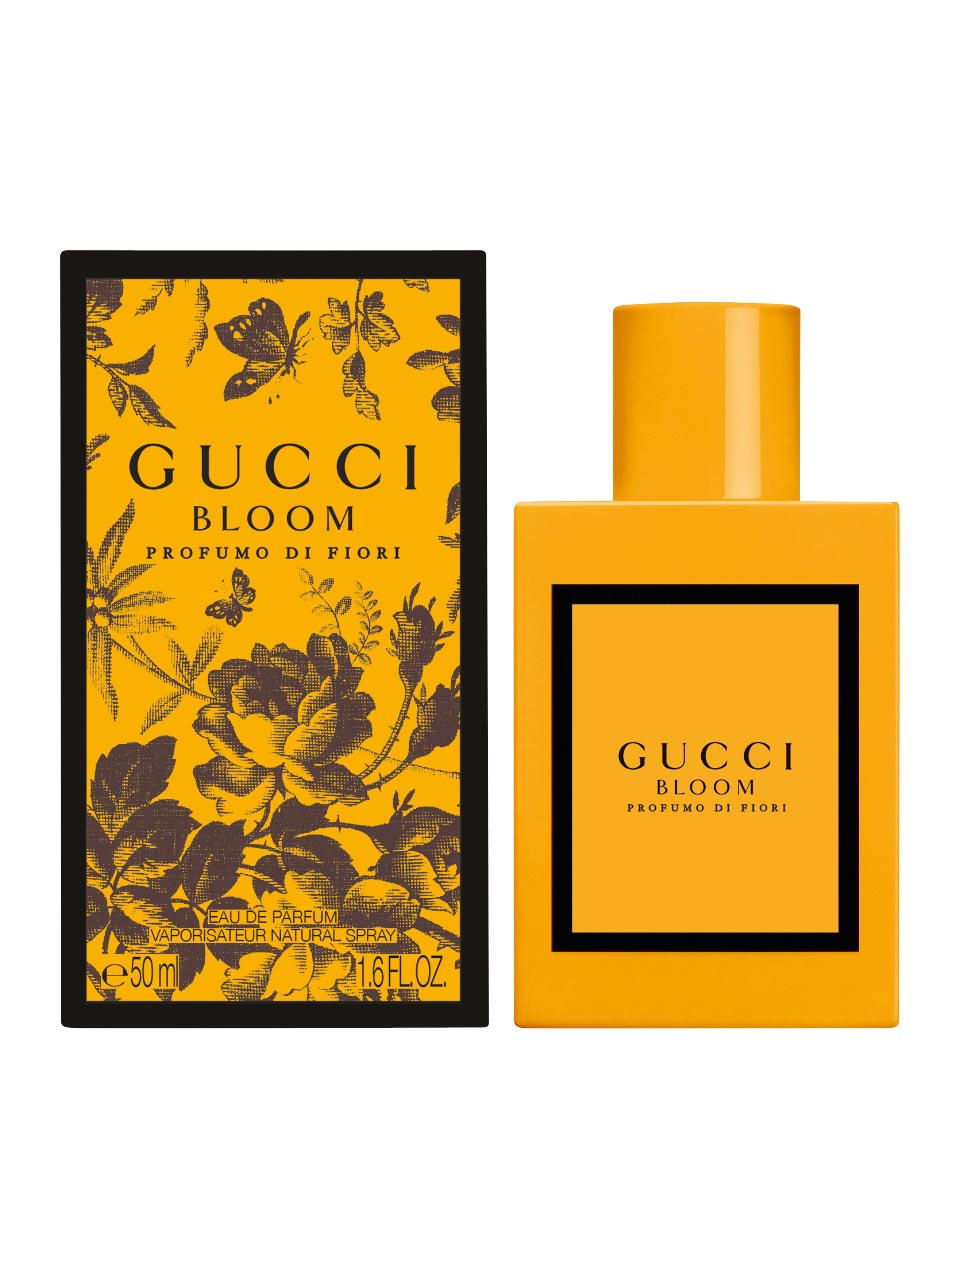 Gucci Bloom Profumo Di Fiori Eau de Parfum 50 ml null - onesize - 1